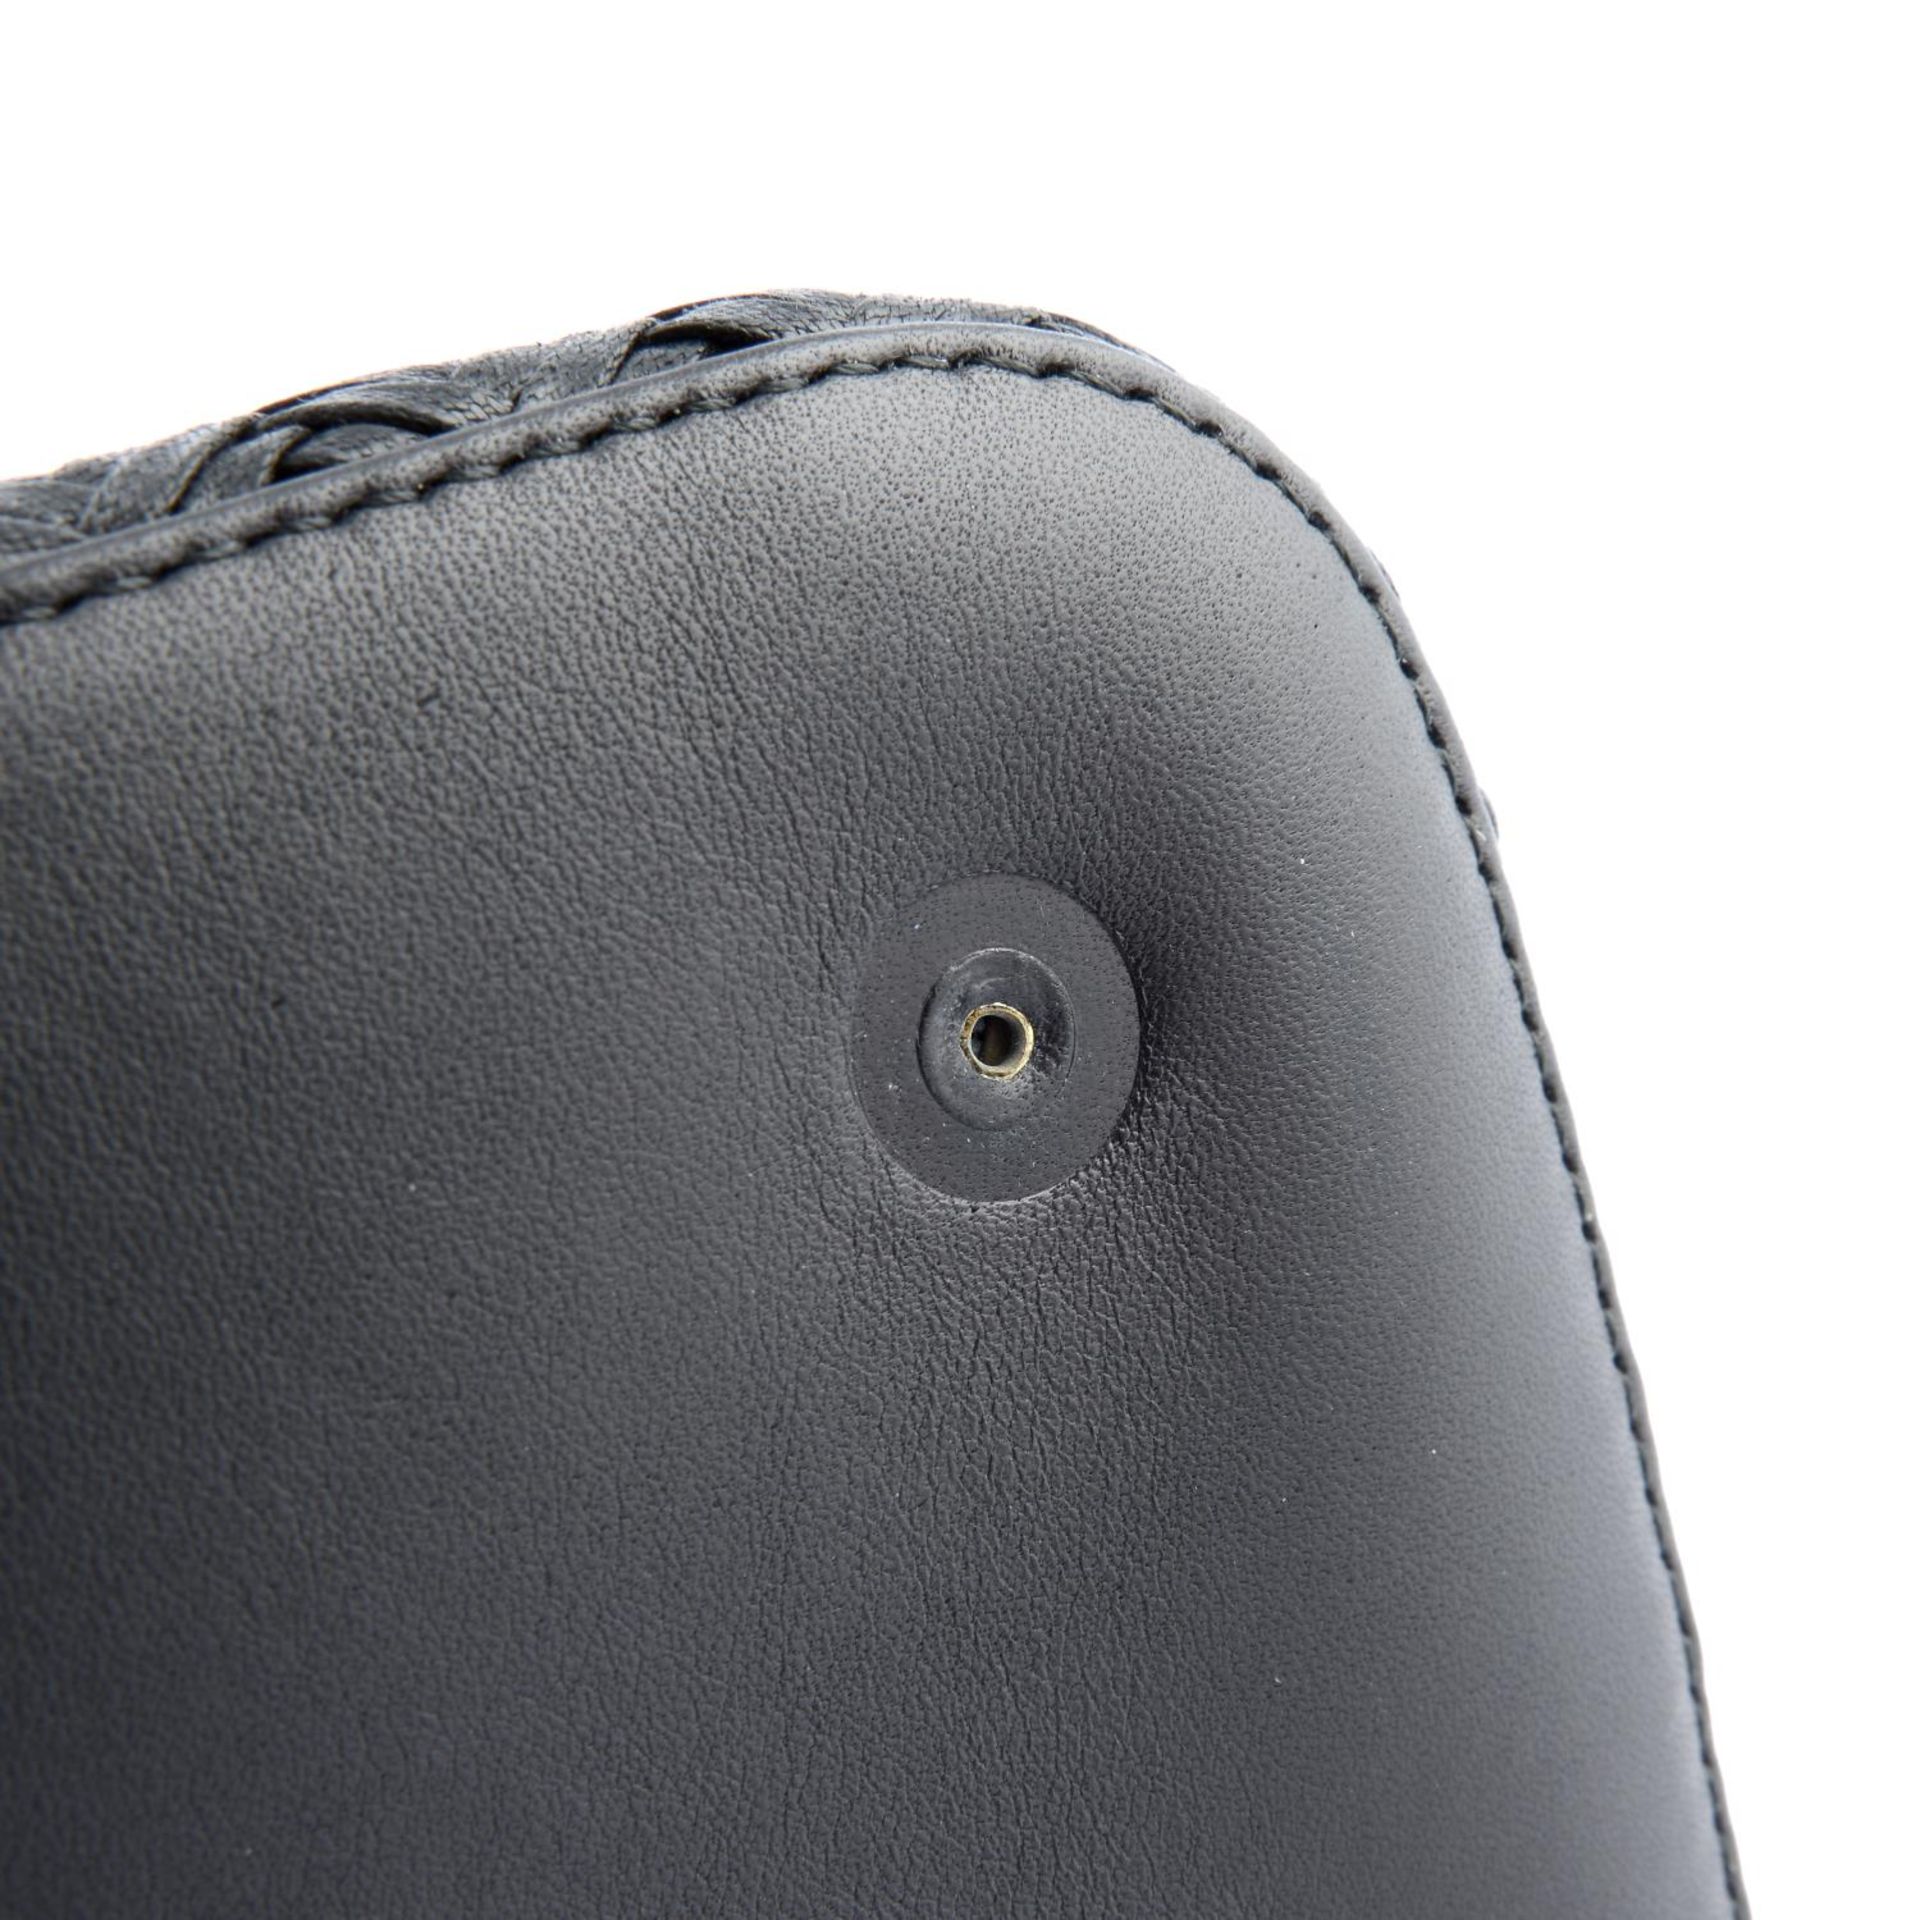 BULGARI - a woven leather Isabella Rossellini handbag. - Image 5 of 5